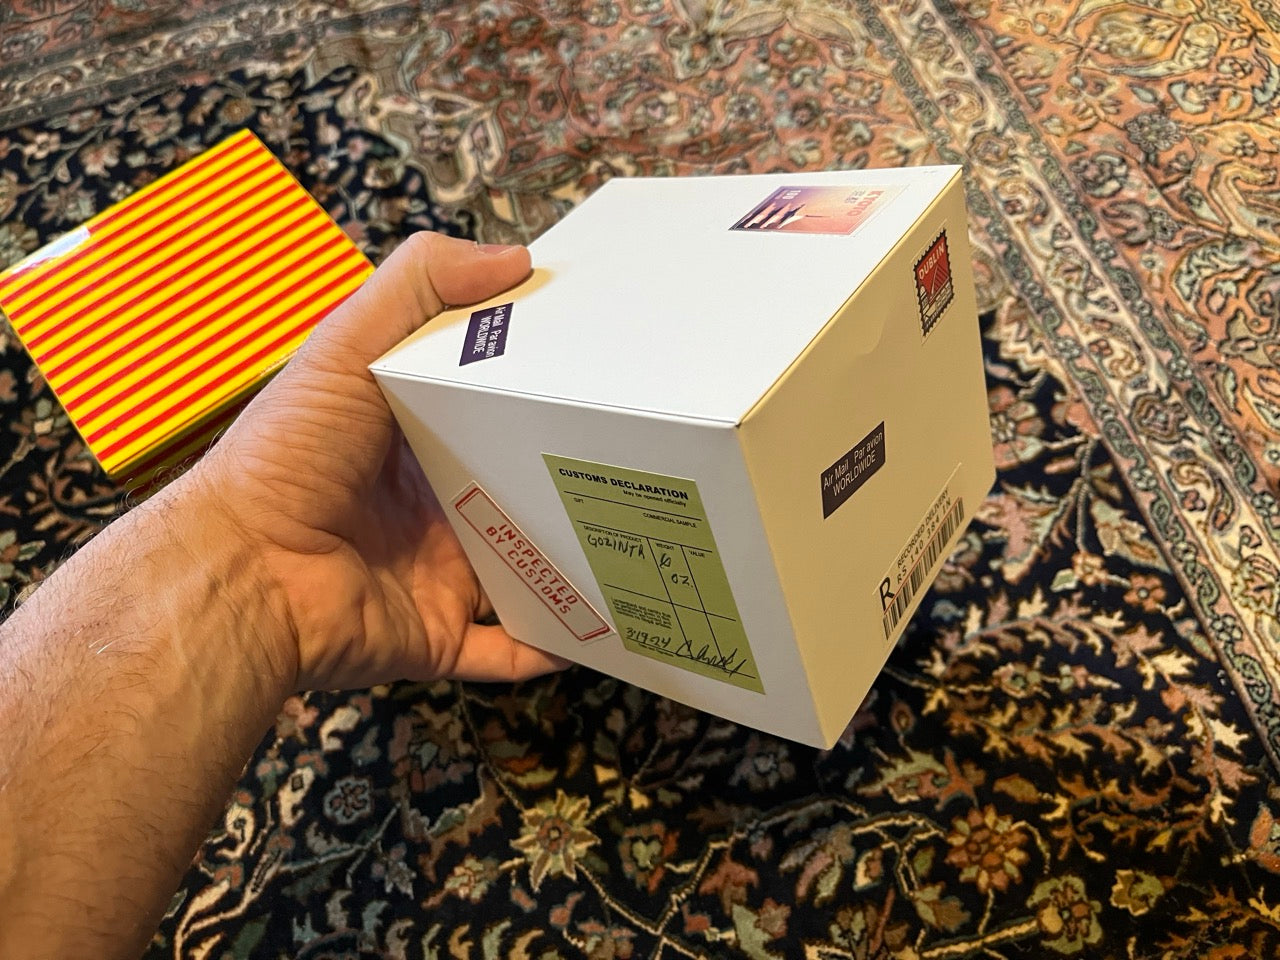 Lubor's Gift (Gozinta Boxes) - Lubor Fiedler & Paul Harris (SM)